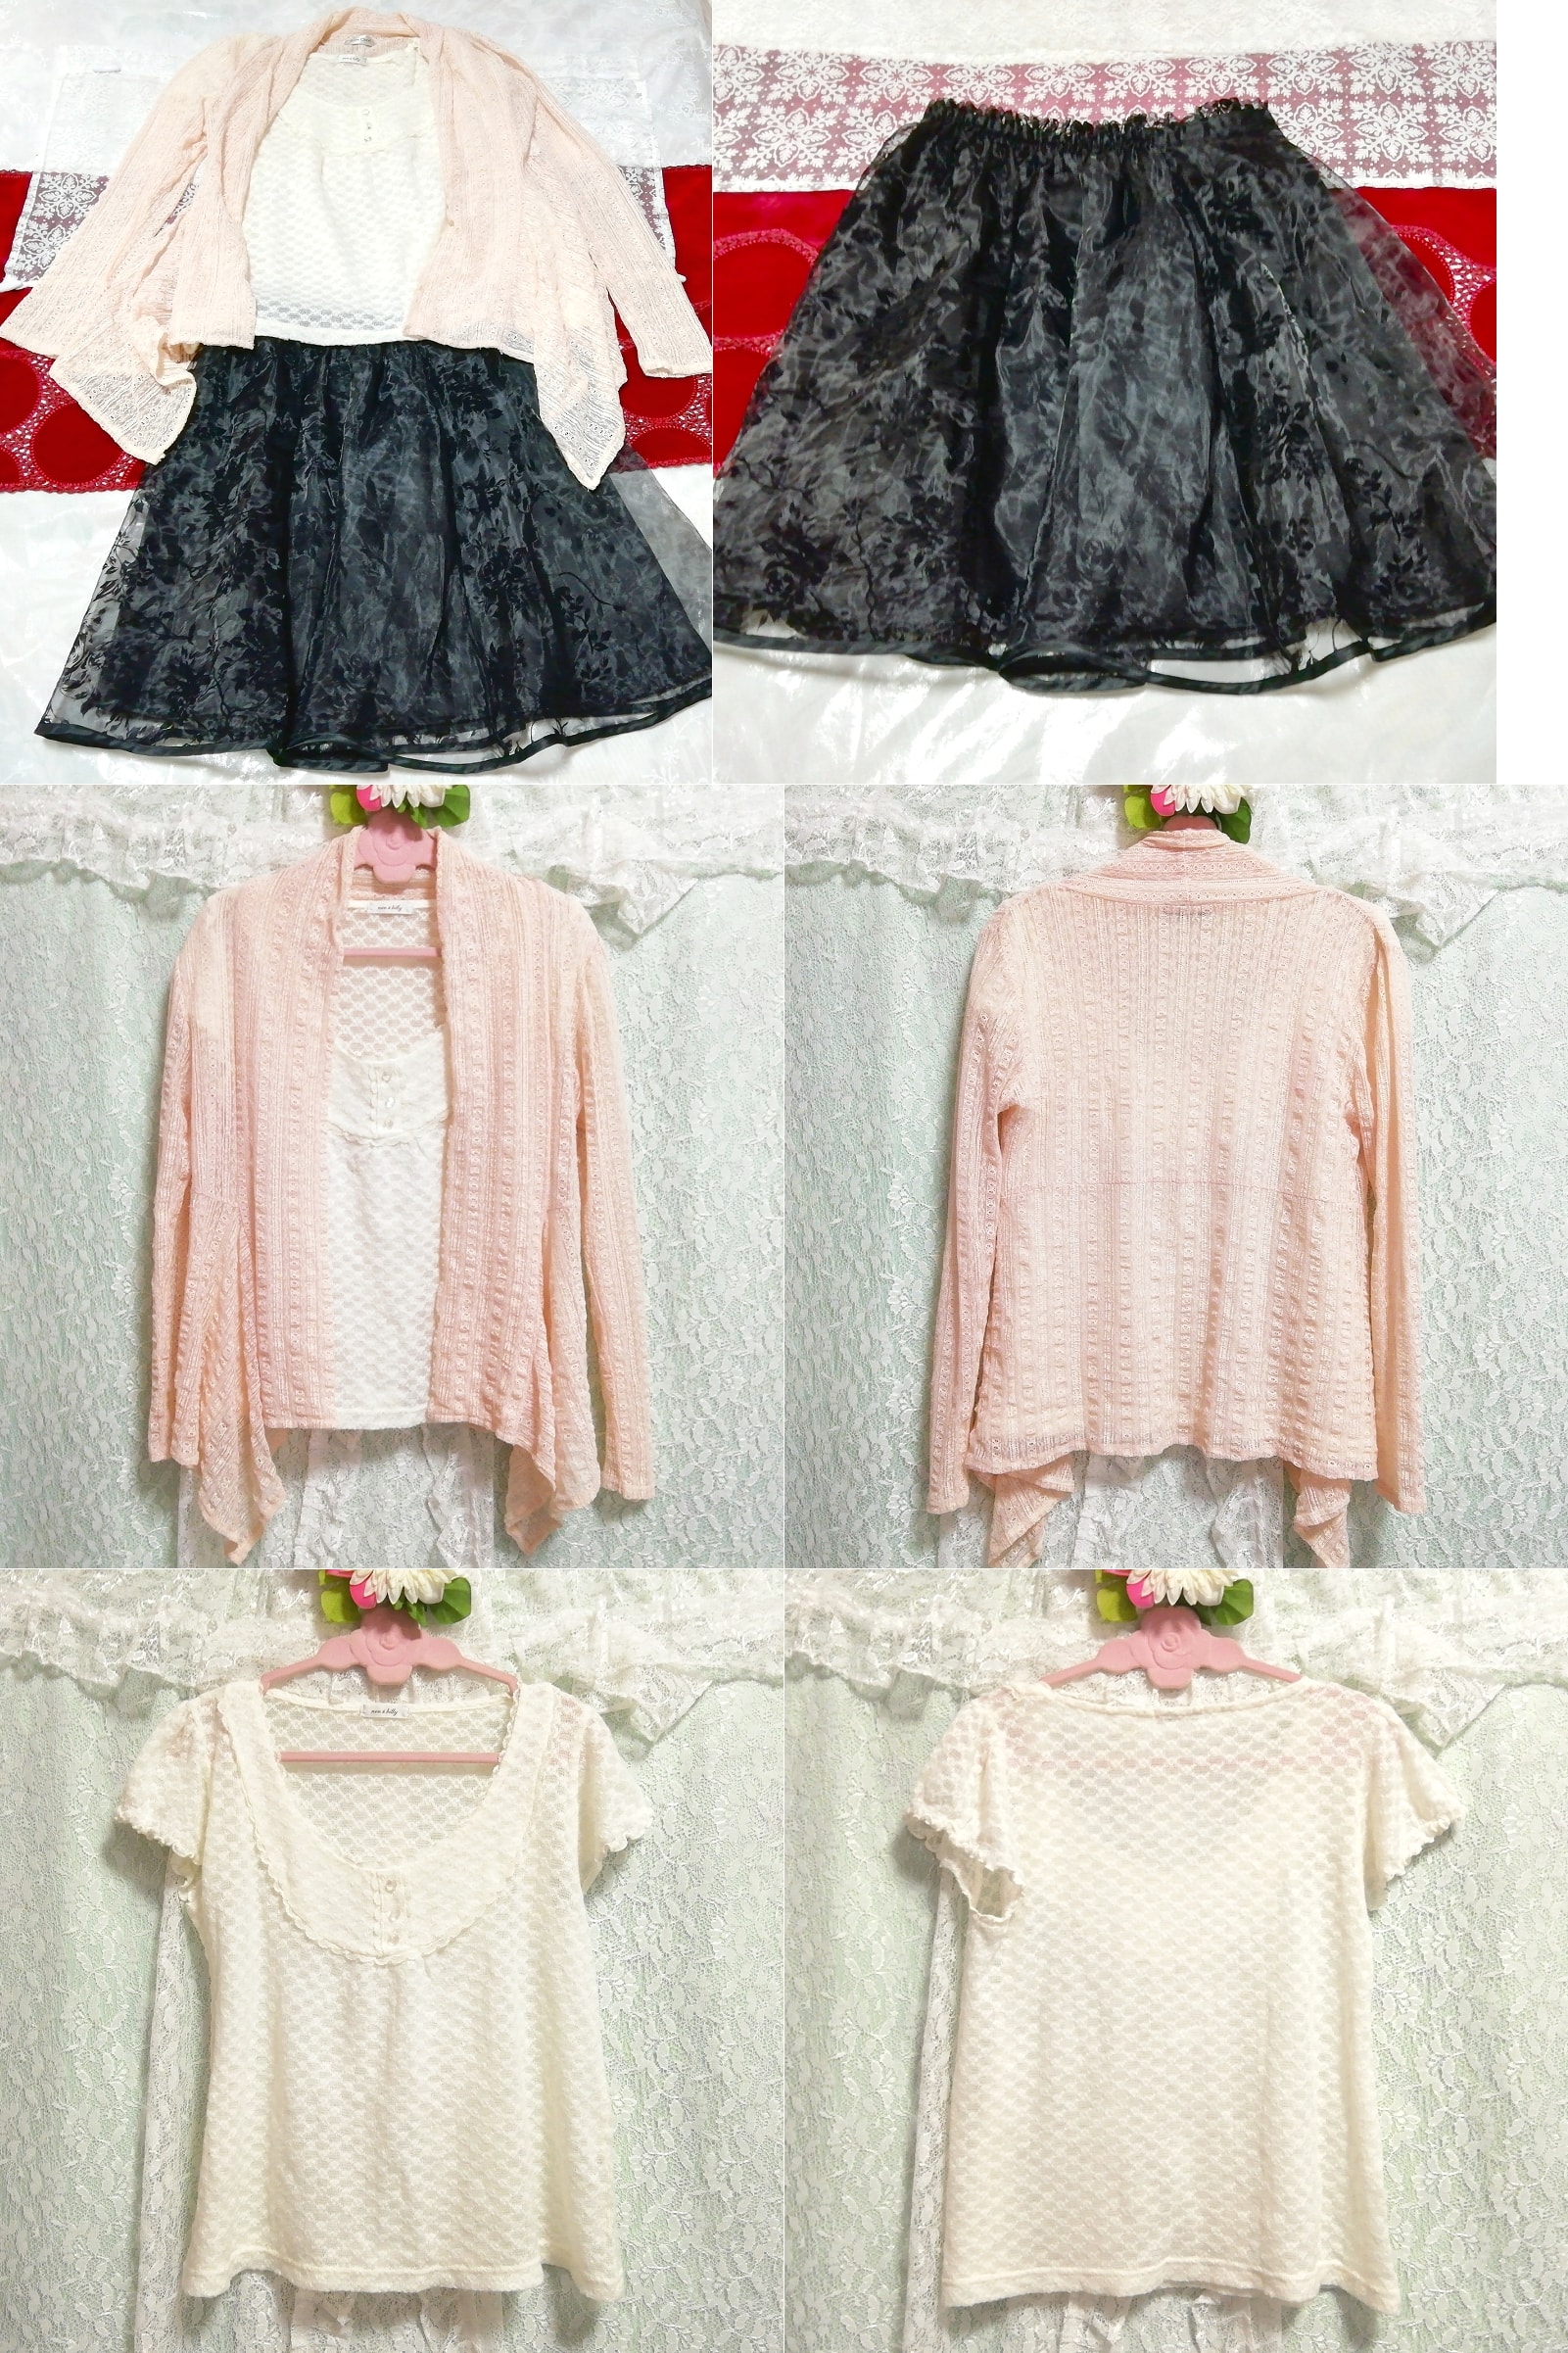 Sakura-Rosa-Spitzen-Cardigan, weiße Spitzentunika, schwarzer Tüllrock, Mode, Frauenmode, Nachtwäsche, Pyjama